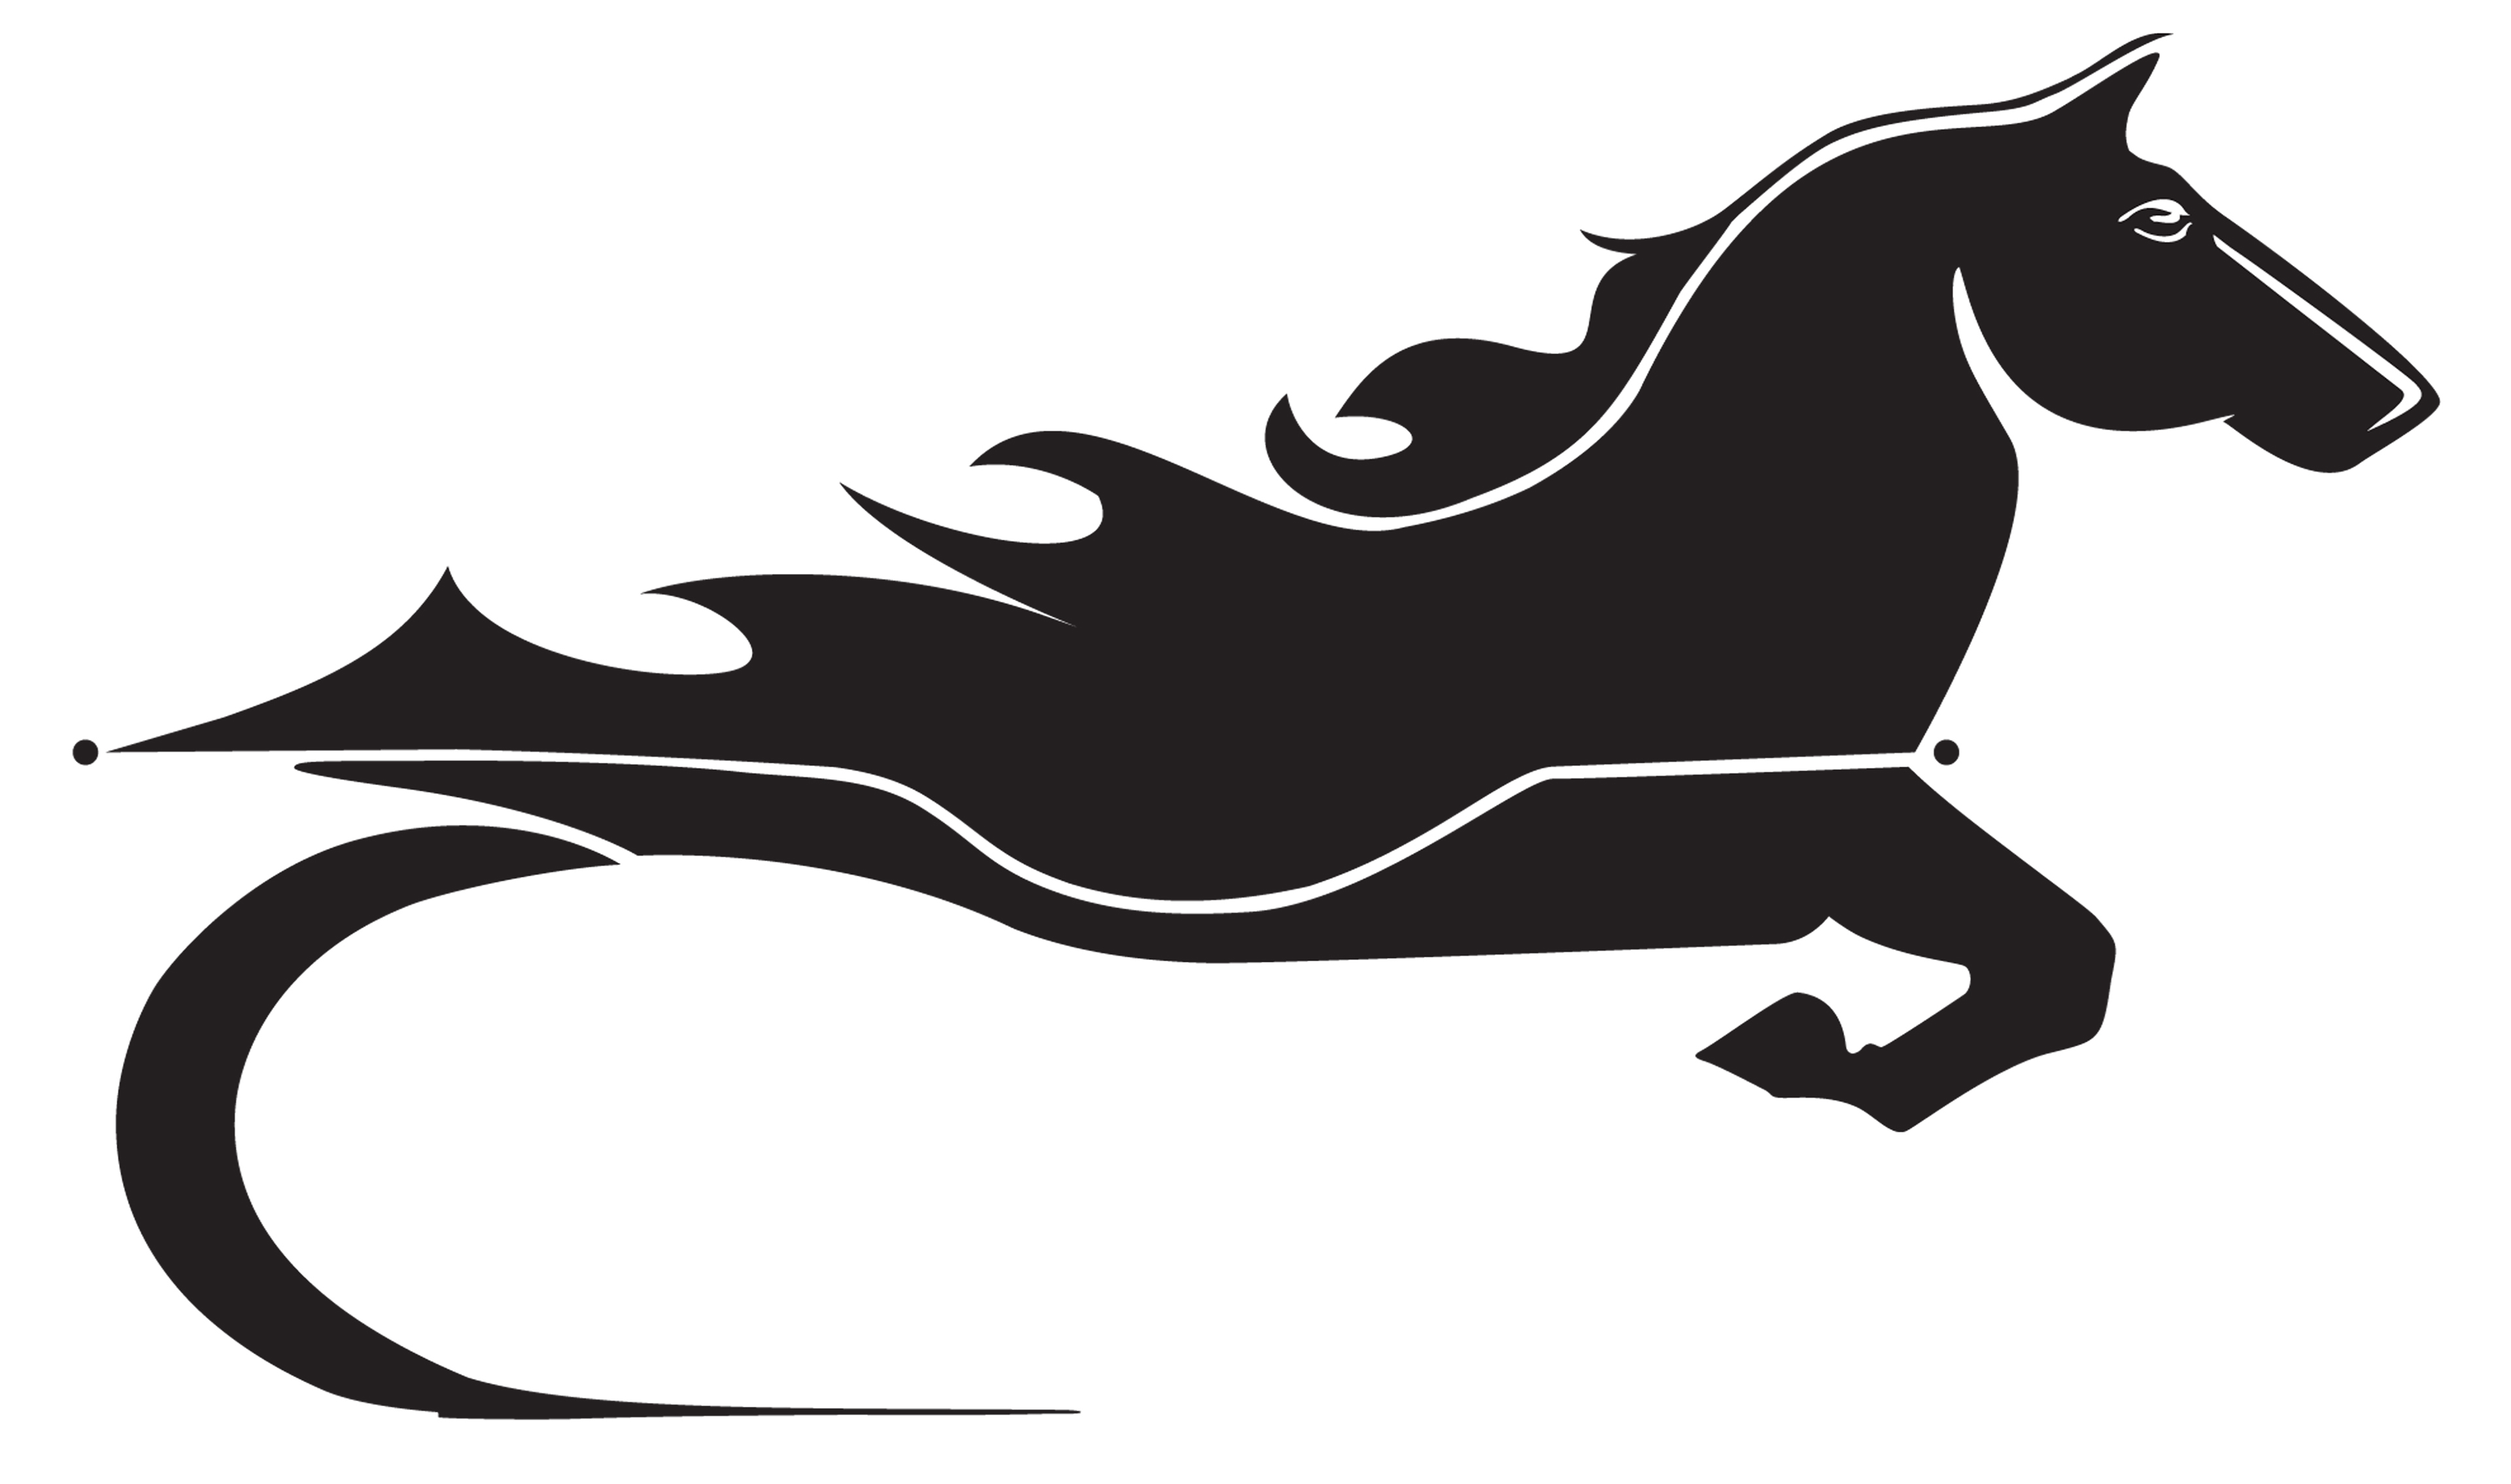 Horse logo clipart.